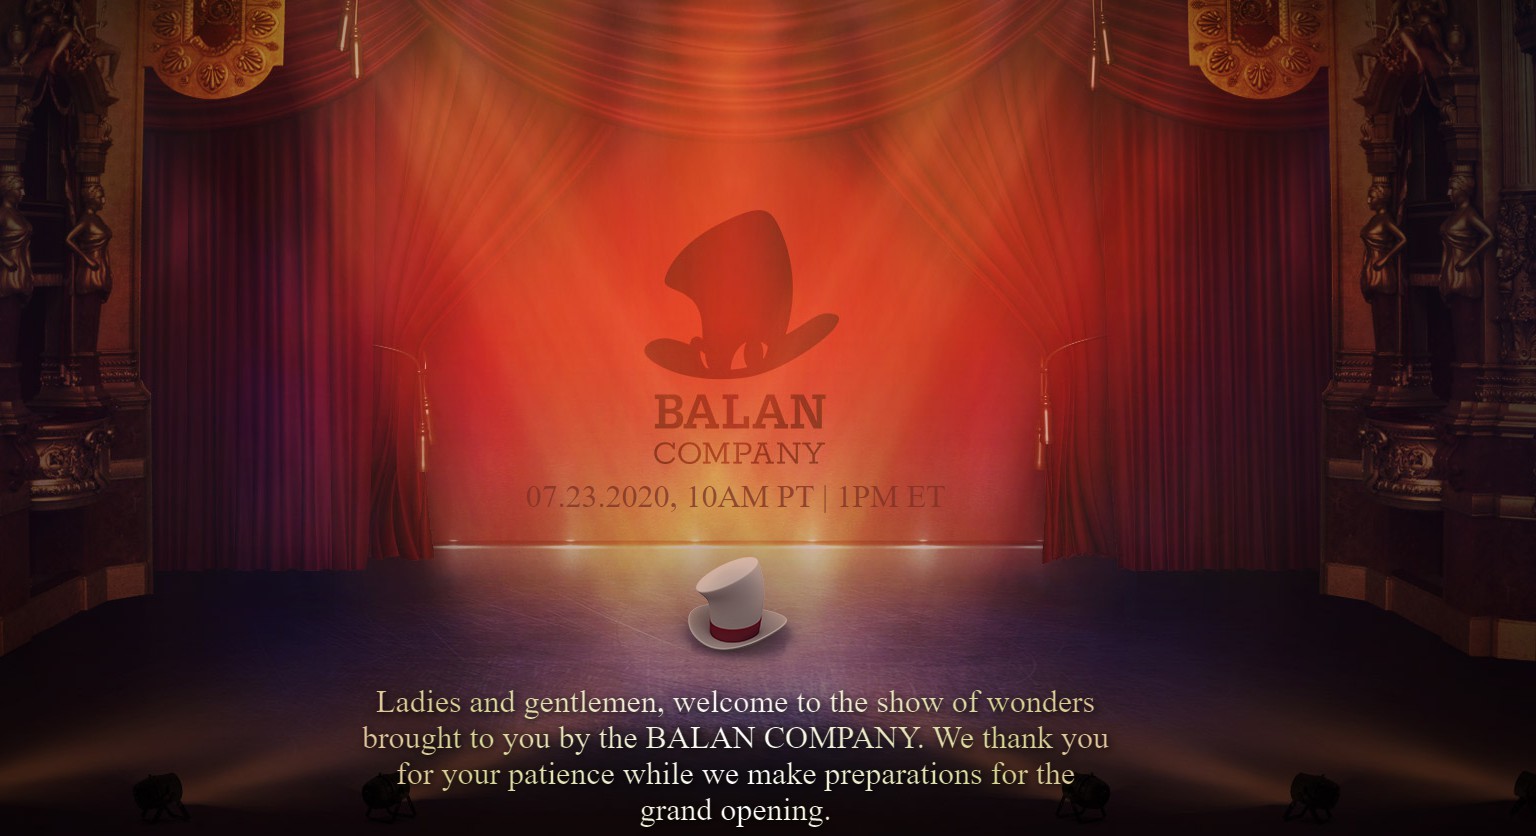 SE最新动作游戏品牌“Balan Company”官网更新 明日公开新消息